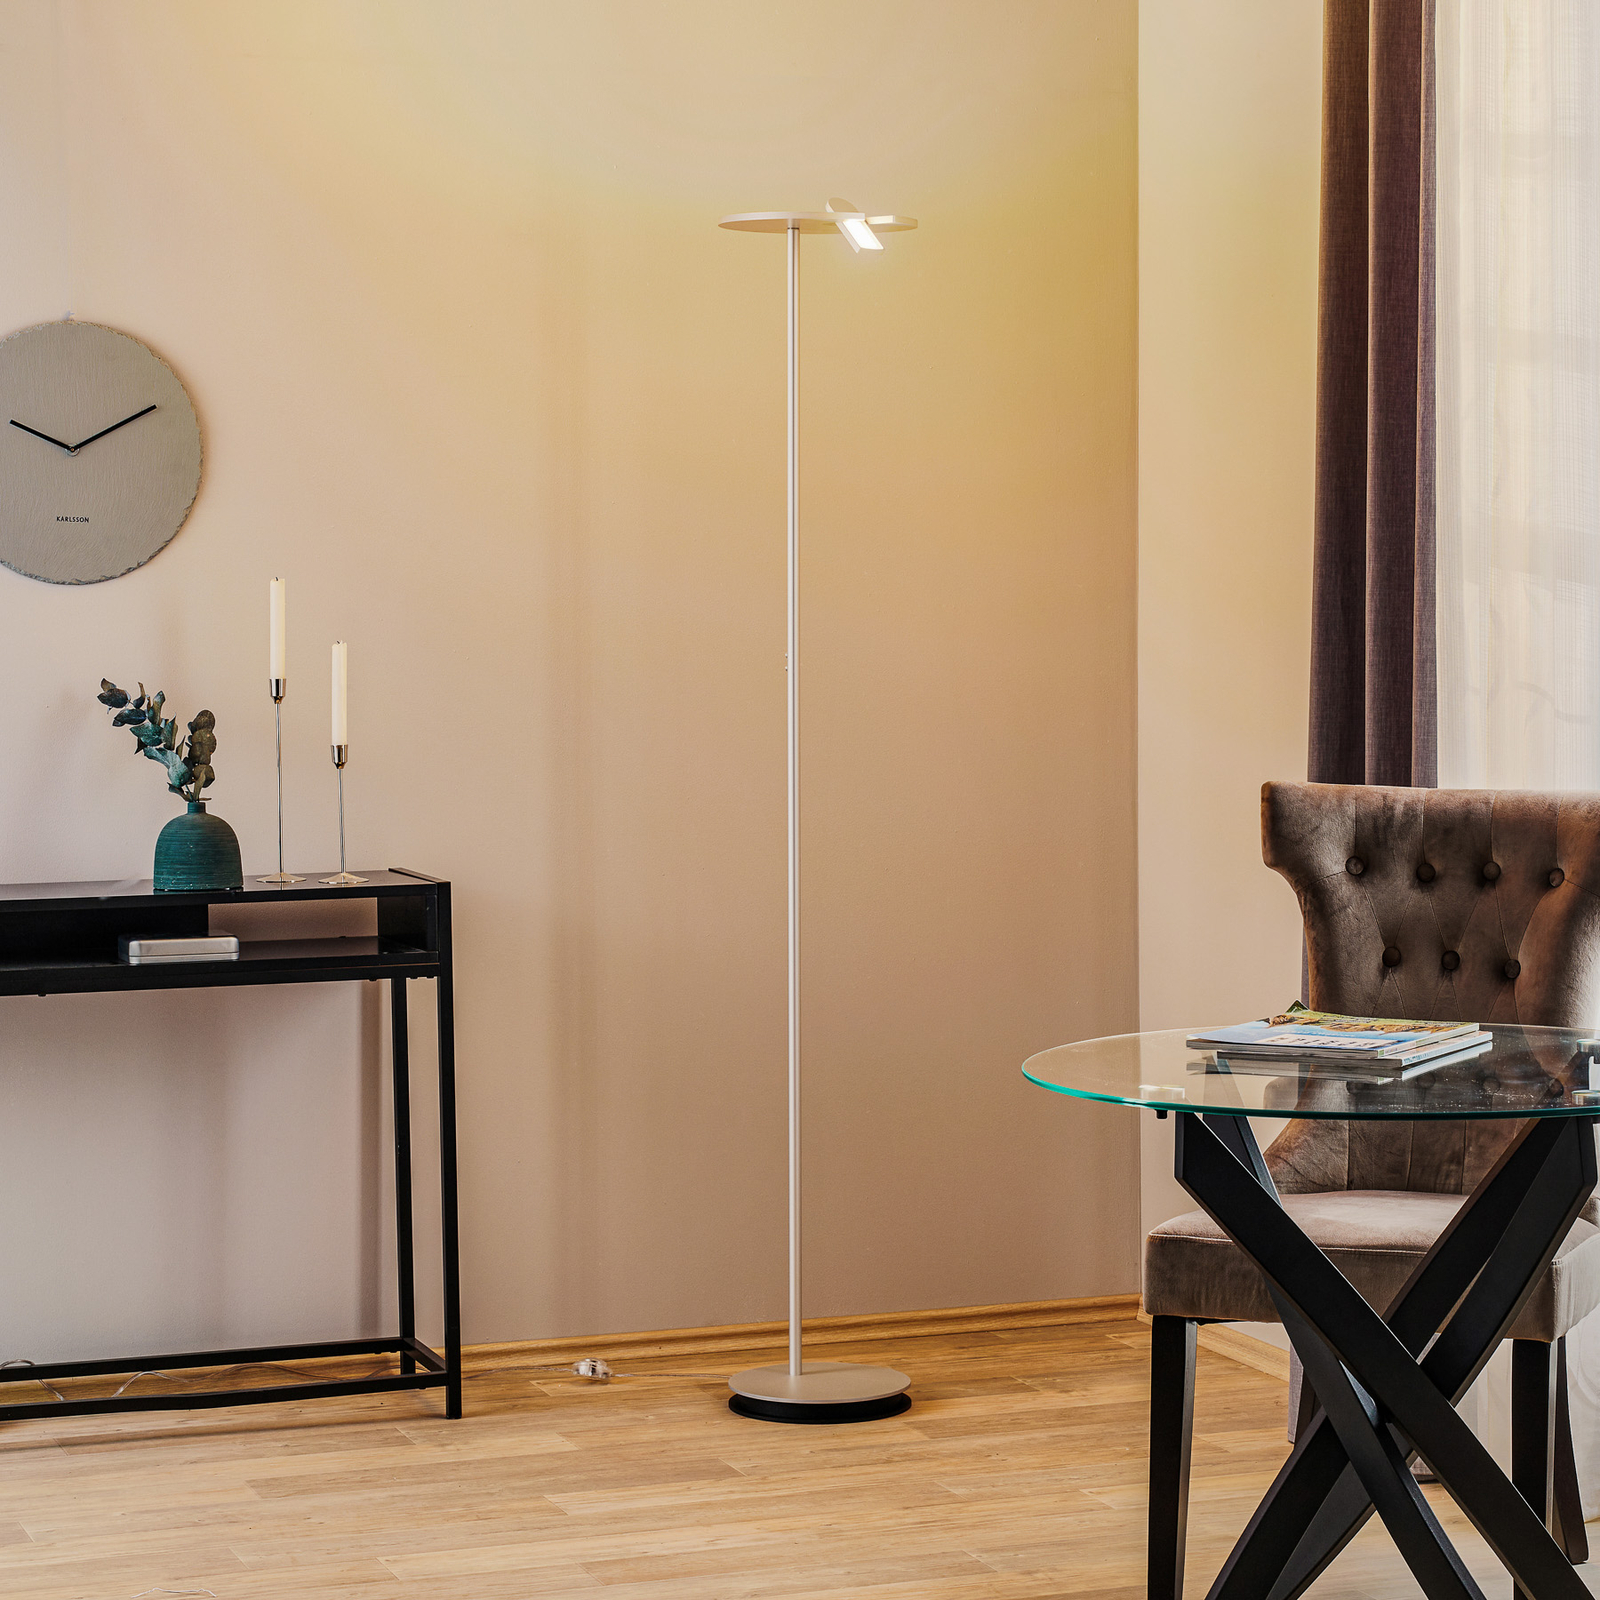 Bopp Share LED uplighter, reading lamp, aluminium